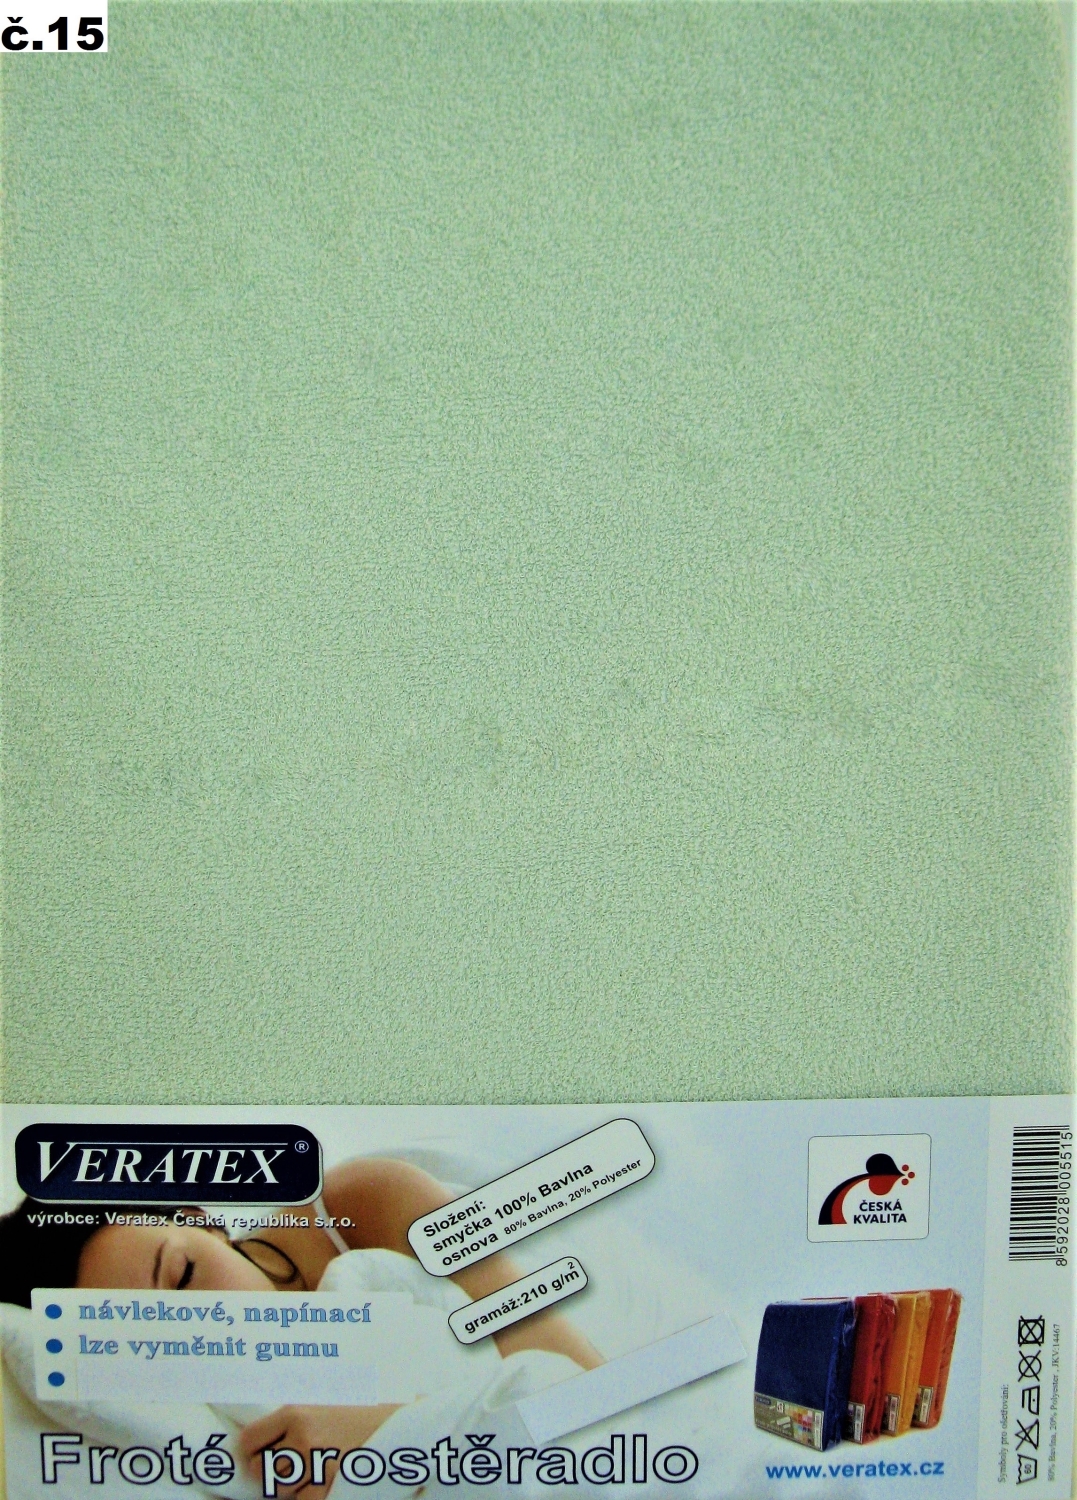 Veratex Froté prostěradlo 100x200/16 cm (č.15 sv.zelená) 100 x 200 cm